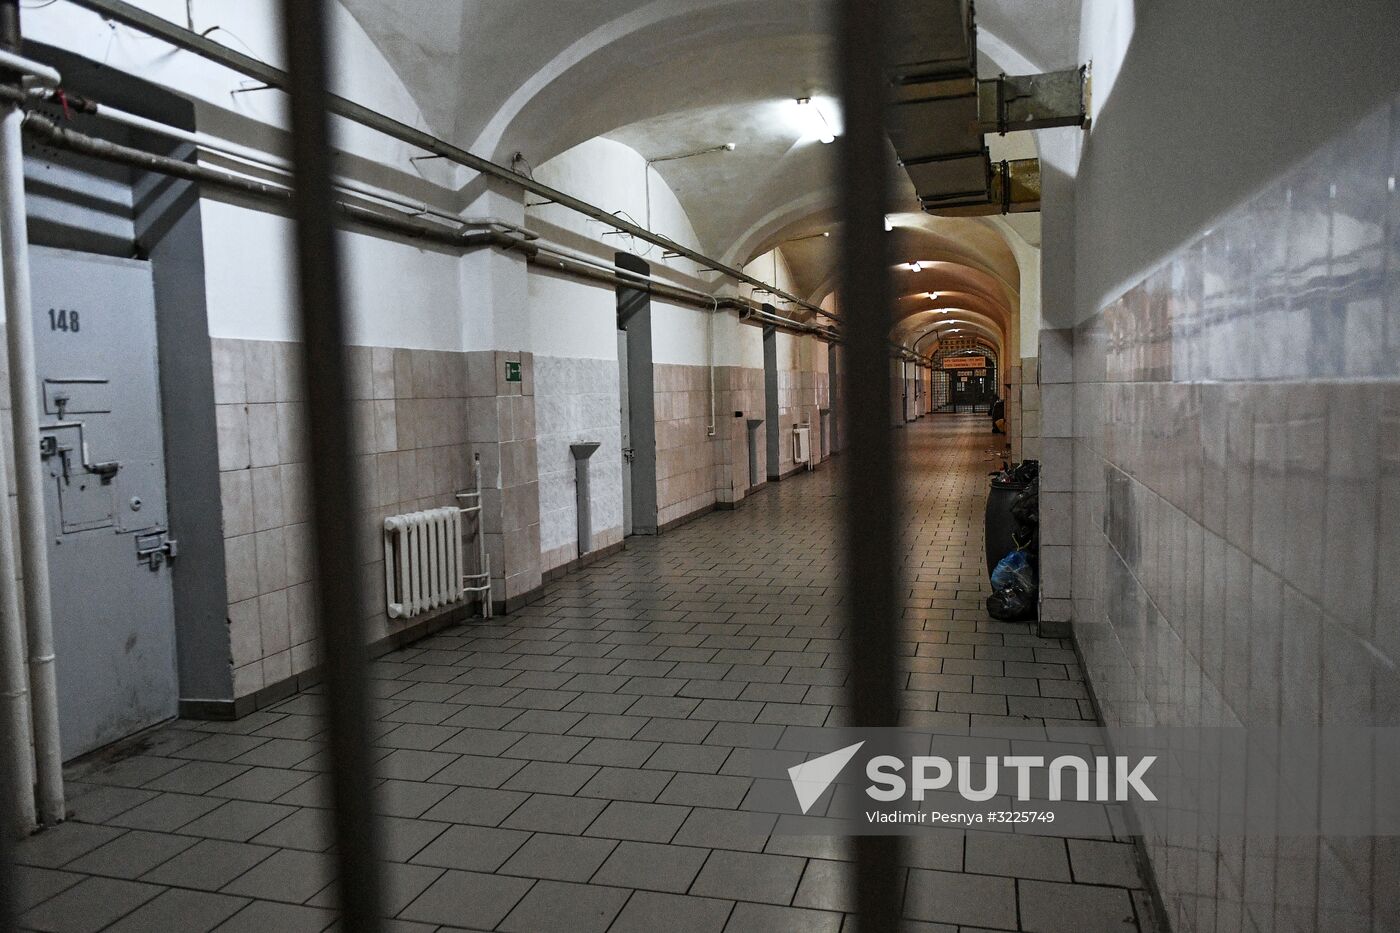 Butyrskaya remand prison